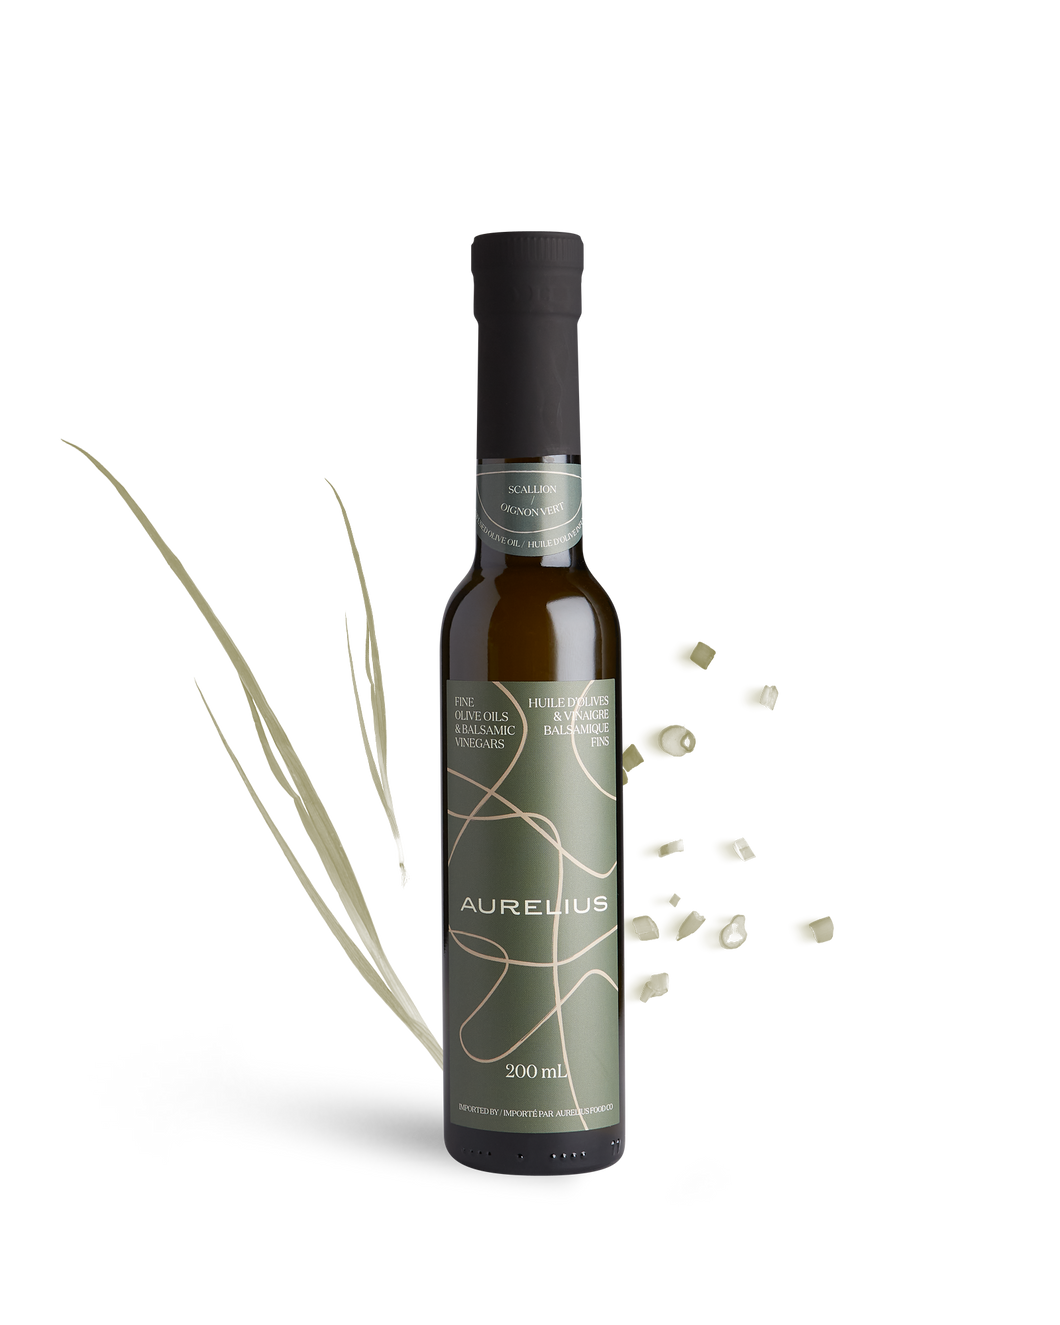 Scallion Infused Olive Oil